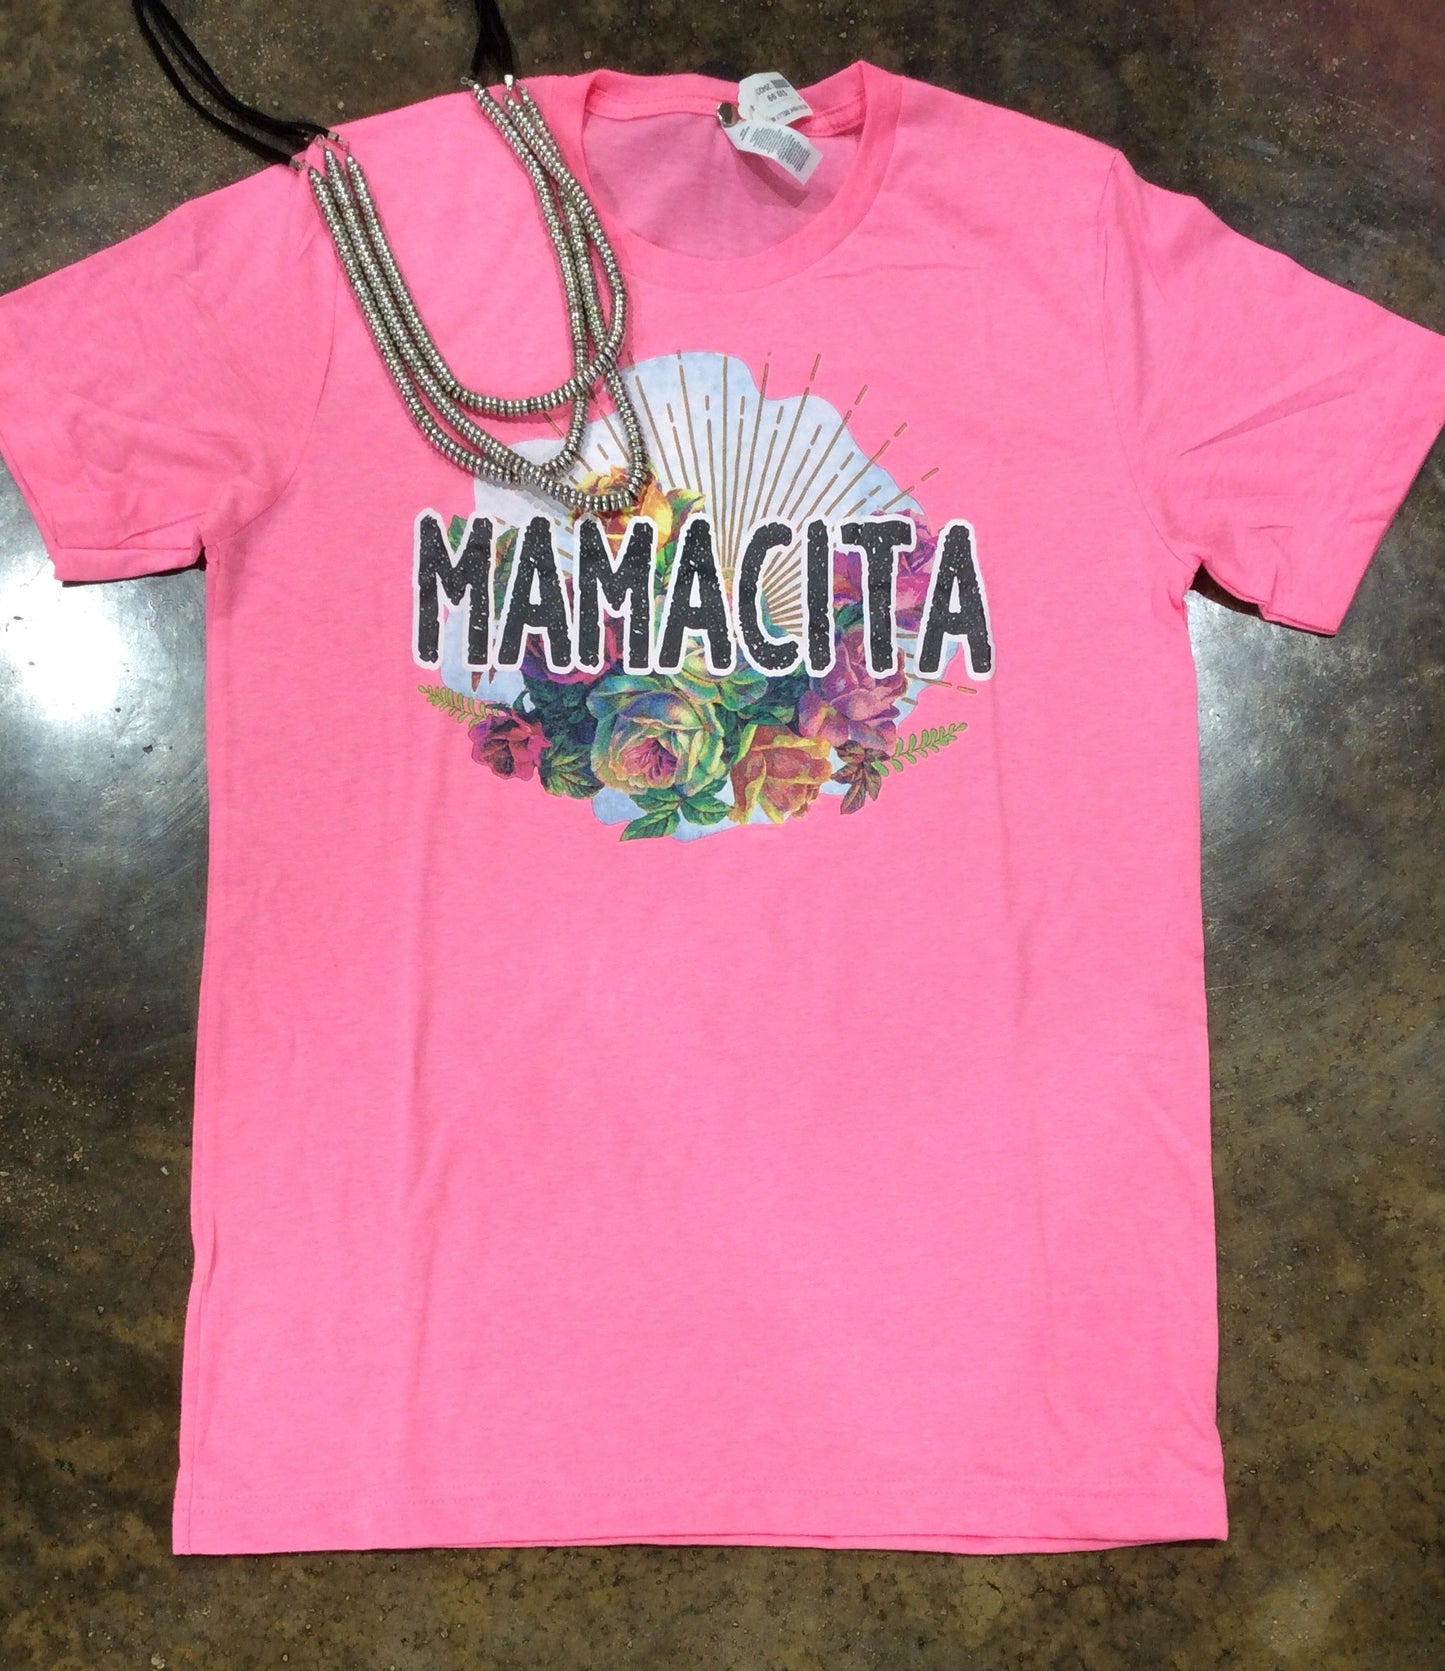 Mamacita in Pink Tee Shirt